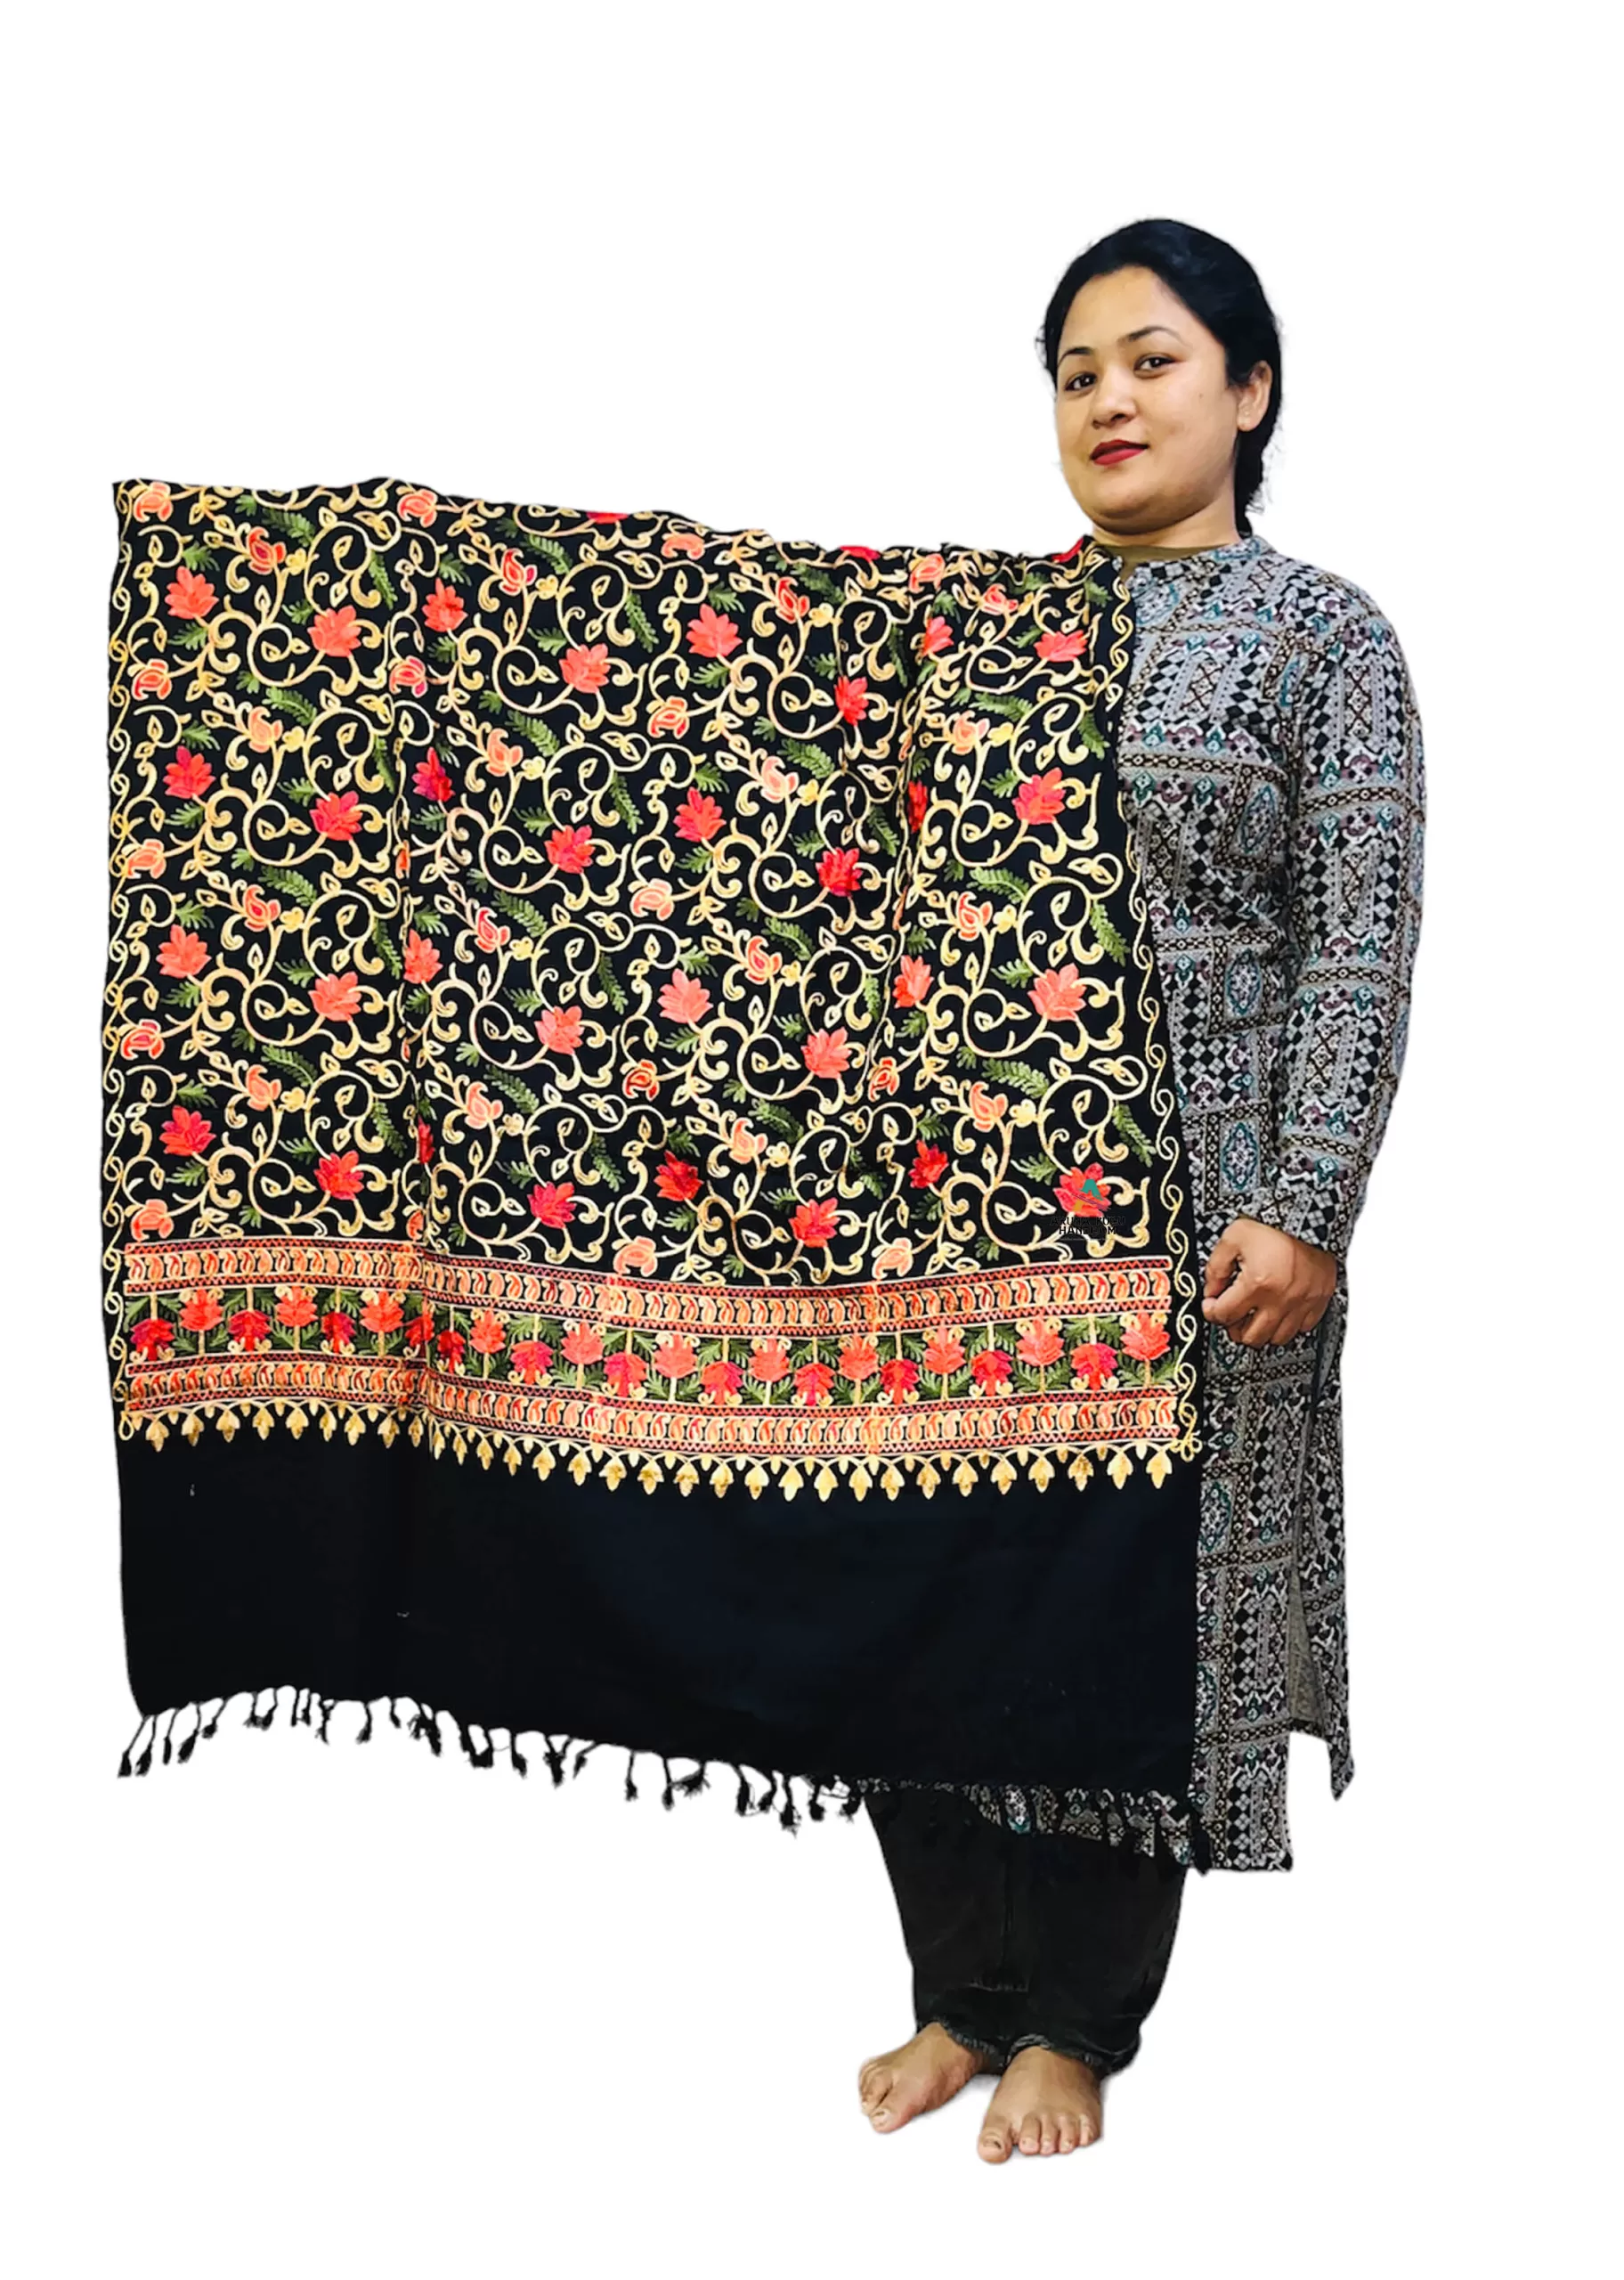 Kashmiri shawls